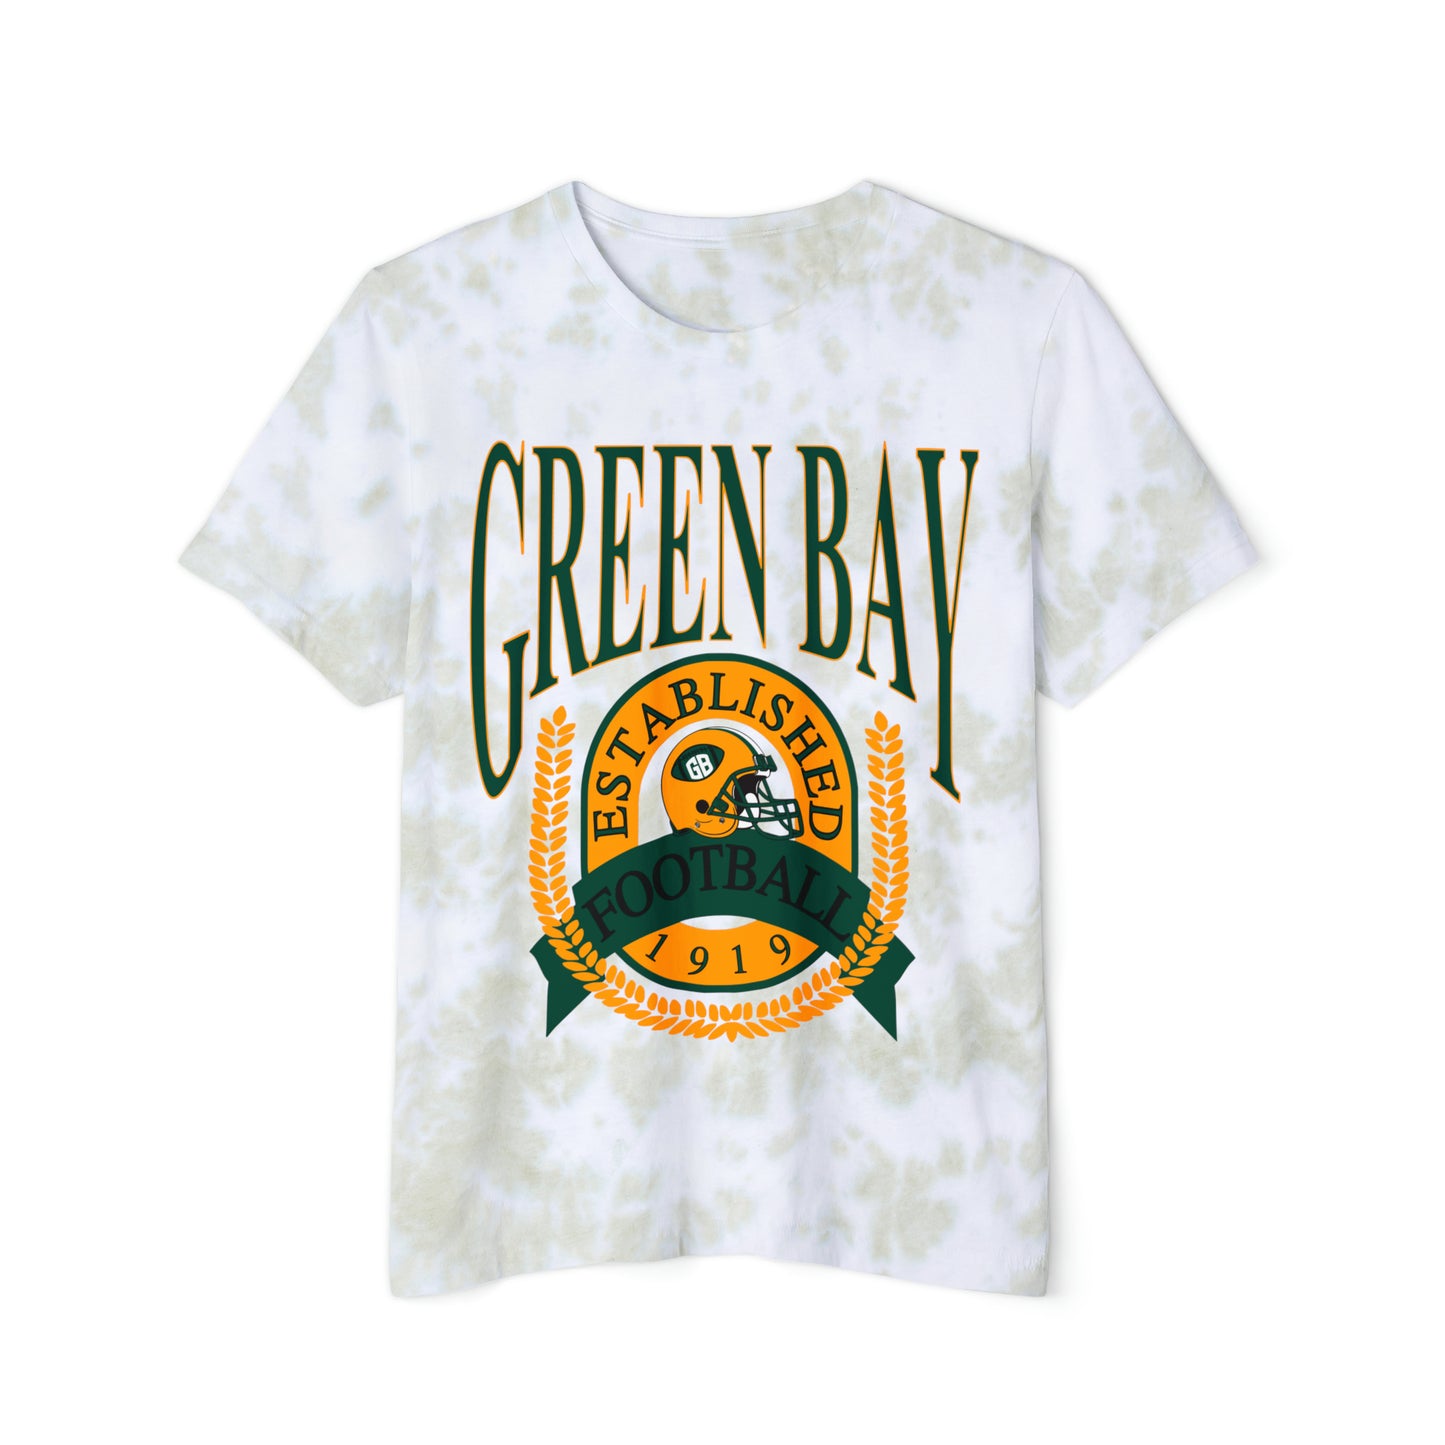 Tie Dye Throwback Green Bay Packers Football Short Sleeve T-Shirt - Vintage Mineral Wash Retro Tee - Men's Women's - Design 1